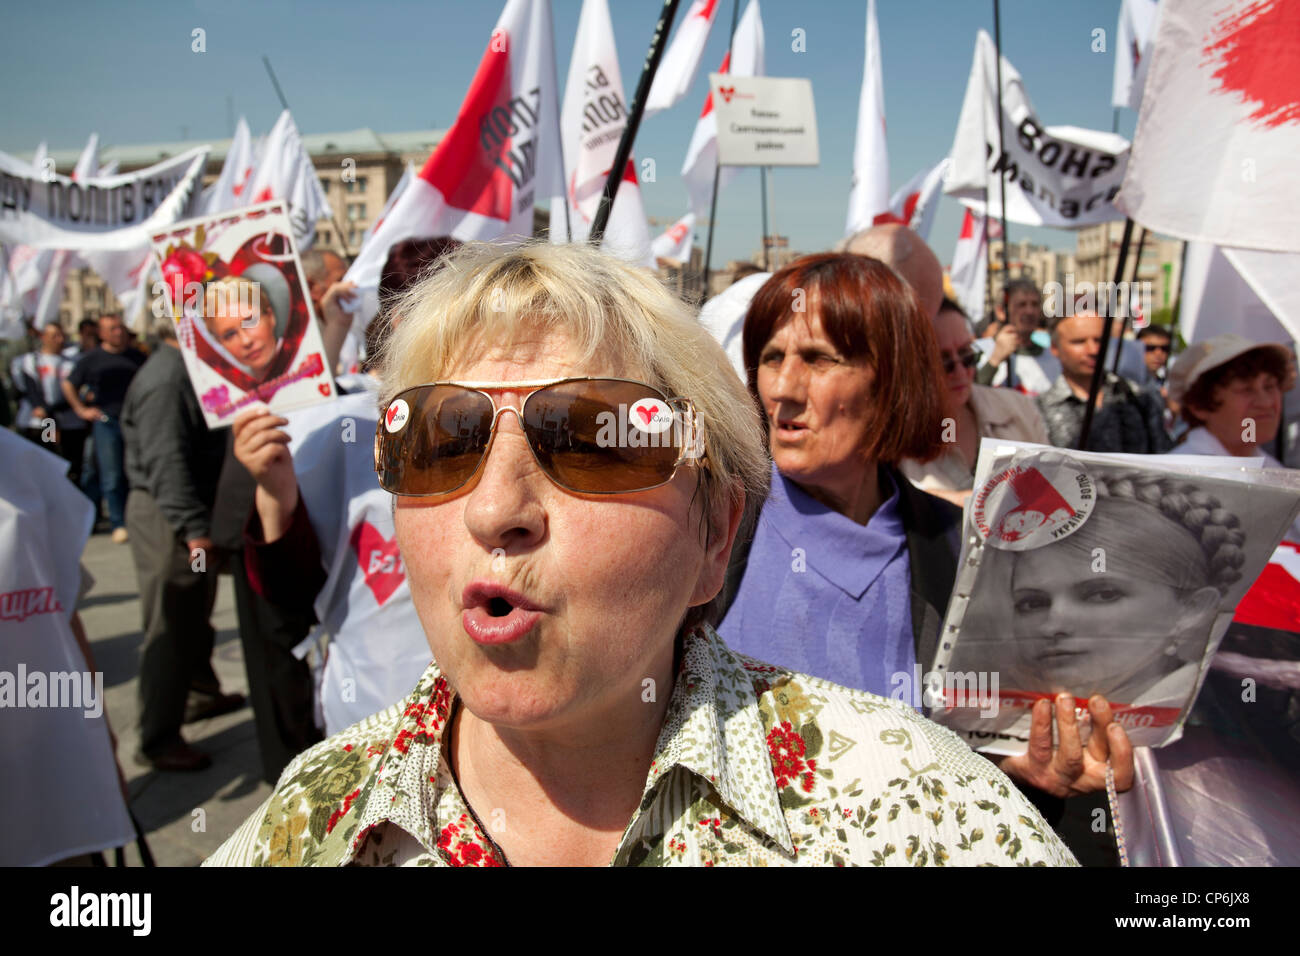 A protest rally for Yulia Tymoshenko in Kiev, Ukraine. Stock Photo